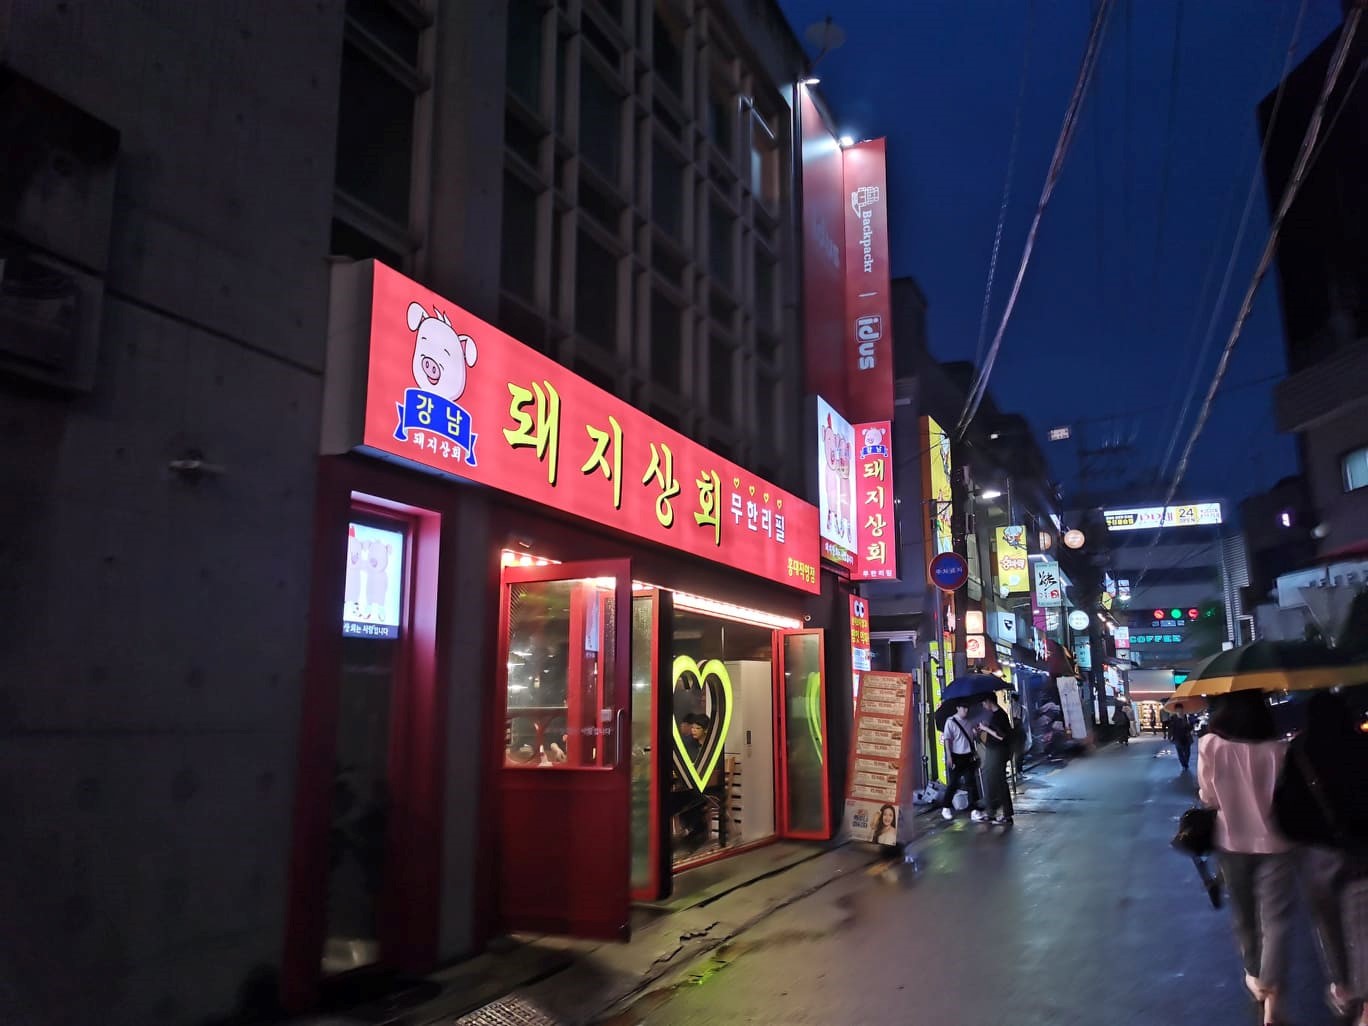 Samgyupsal Restaurant in South Korea